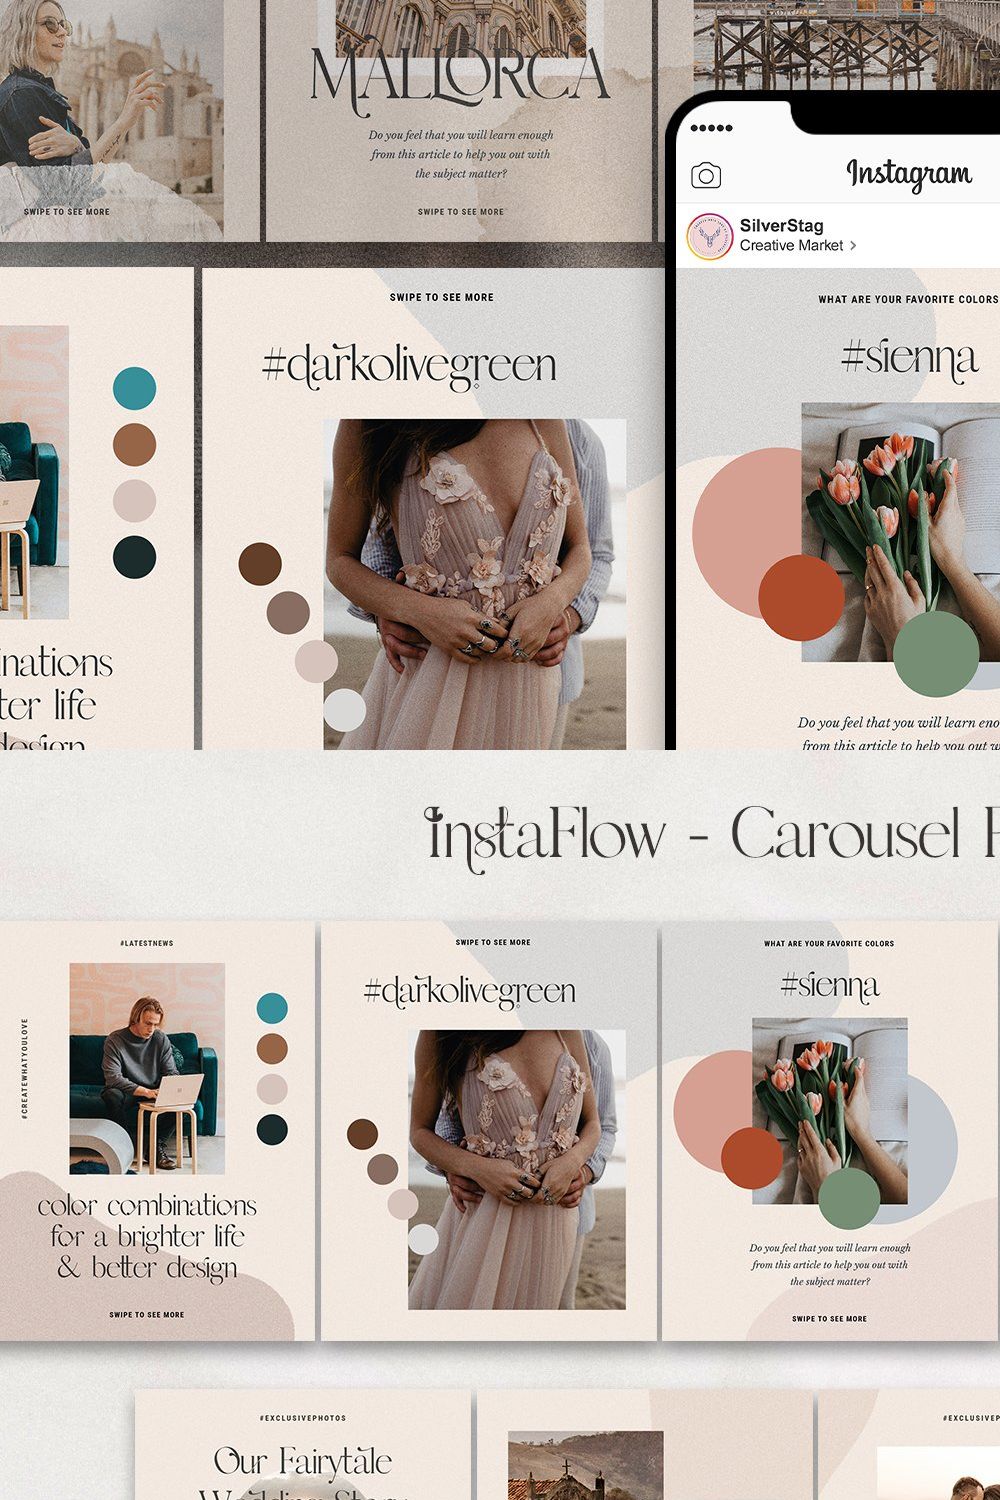 #InstaFlow Carousel Posts & Stories pinterest preview image.